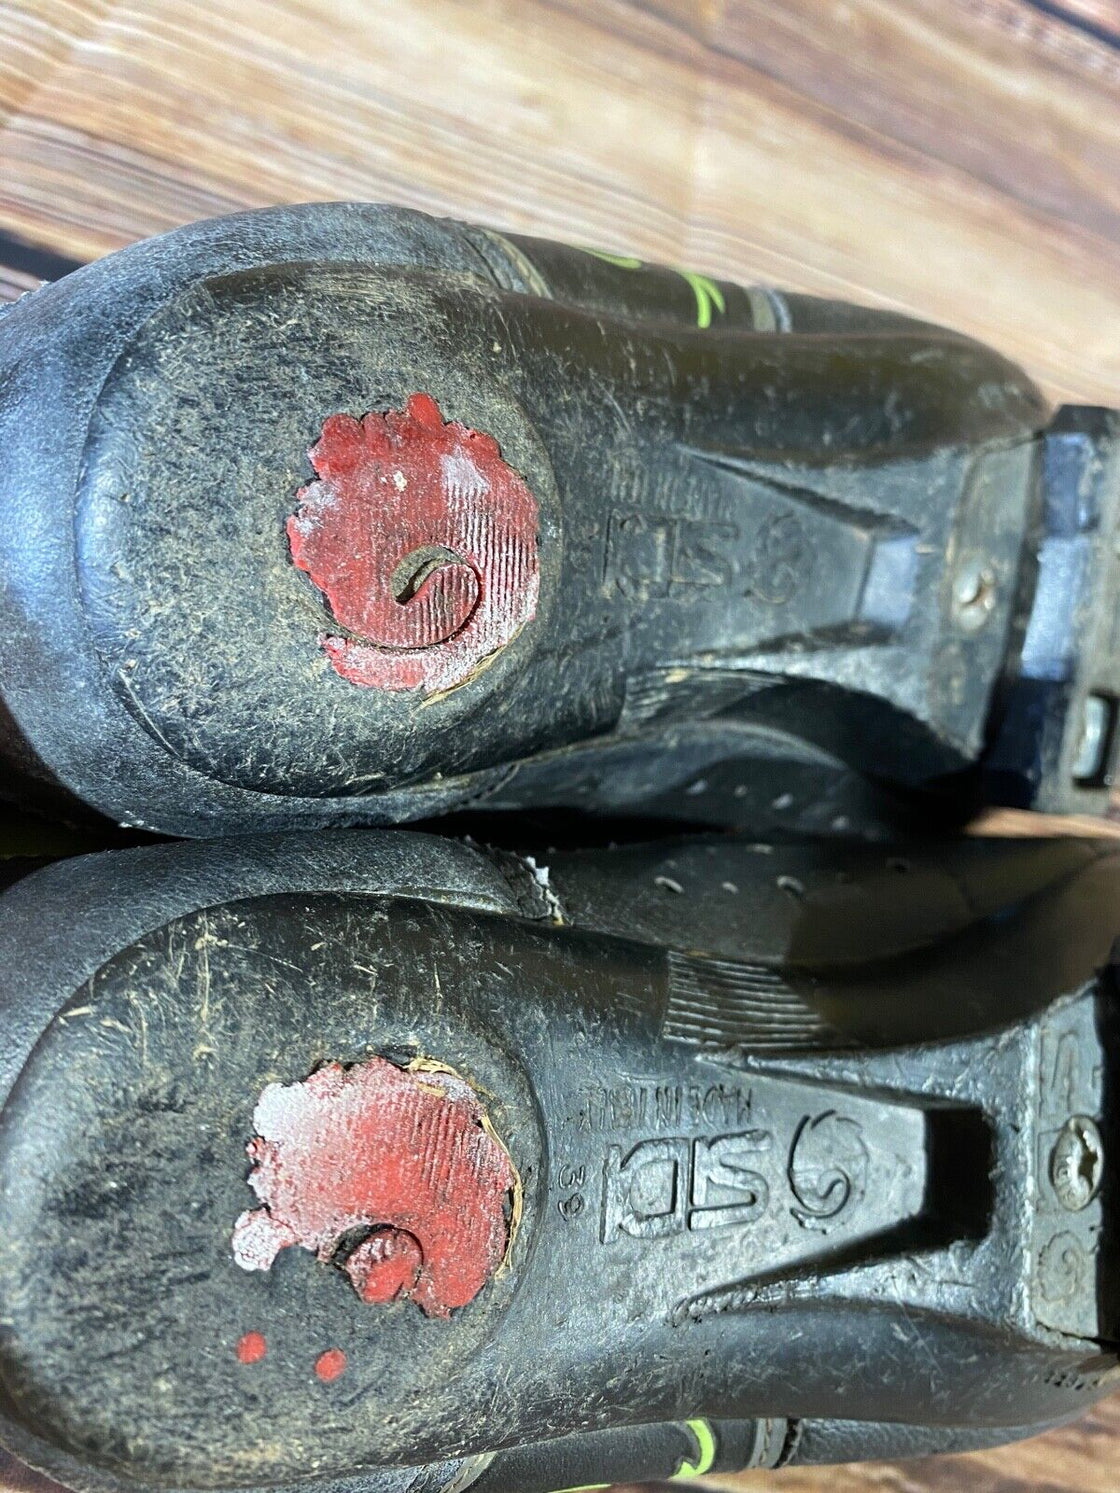 SIDI Vintage Road Cycling Shoes Biking Boots Size EU39, US6, Mondo 233